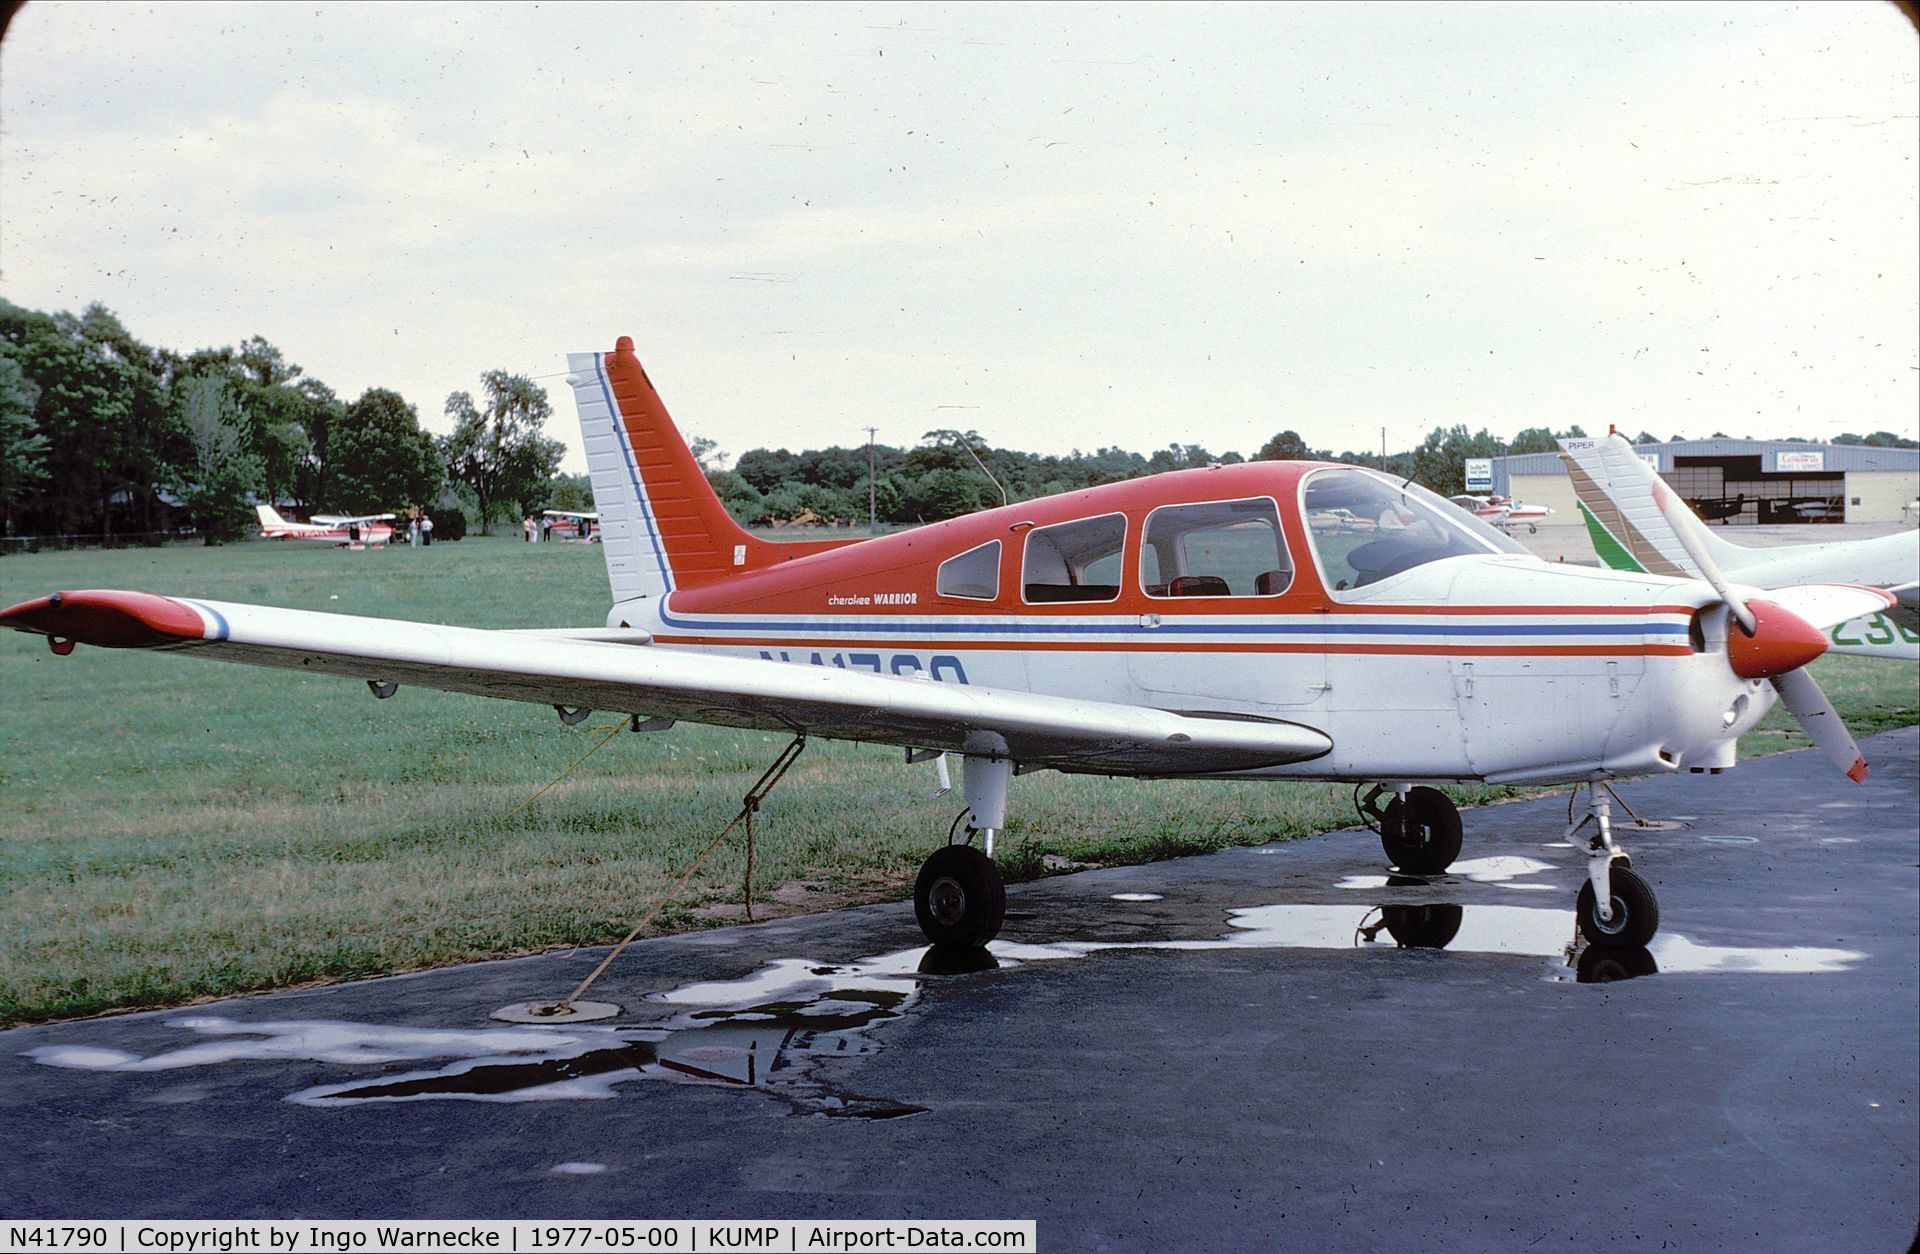 N41790, 1974 Piper PA-28-151 C/N 28-7415332, Piper PA-28-151 Cherokee Warrior at Indianapolis Metropolitan Airport, Indianapolis IN